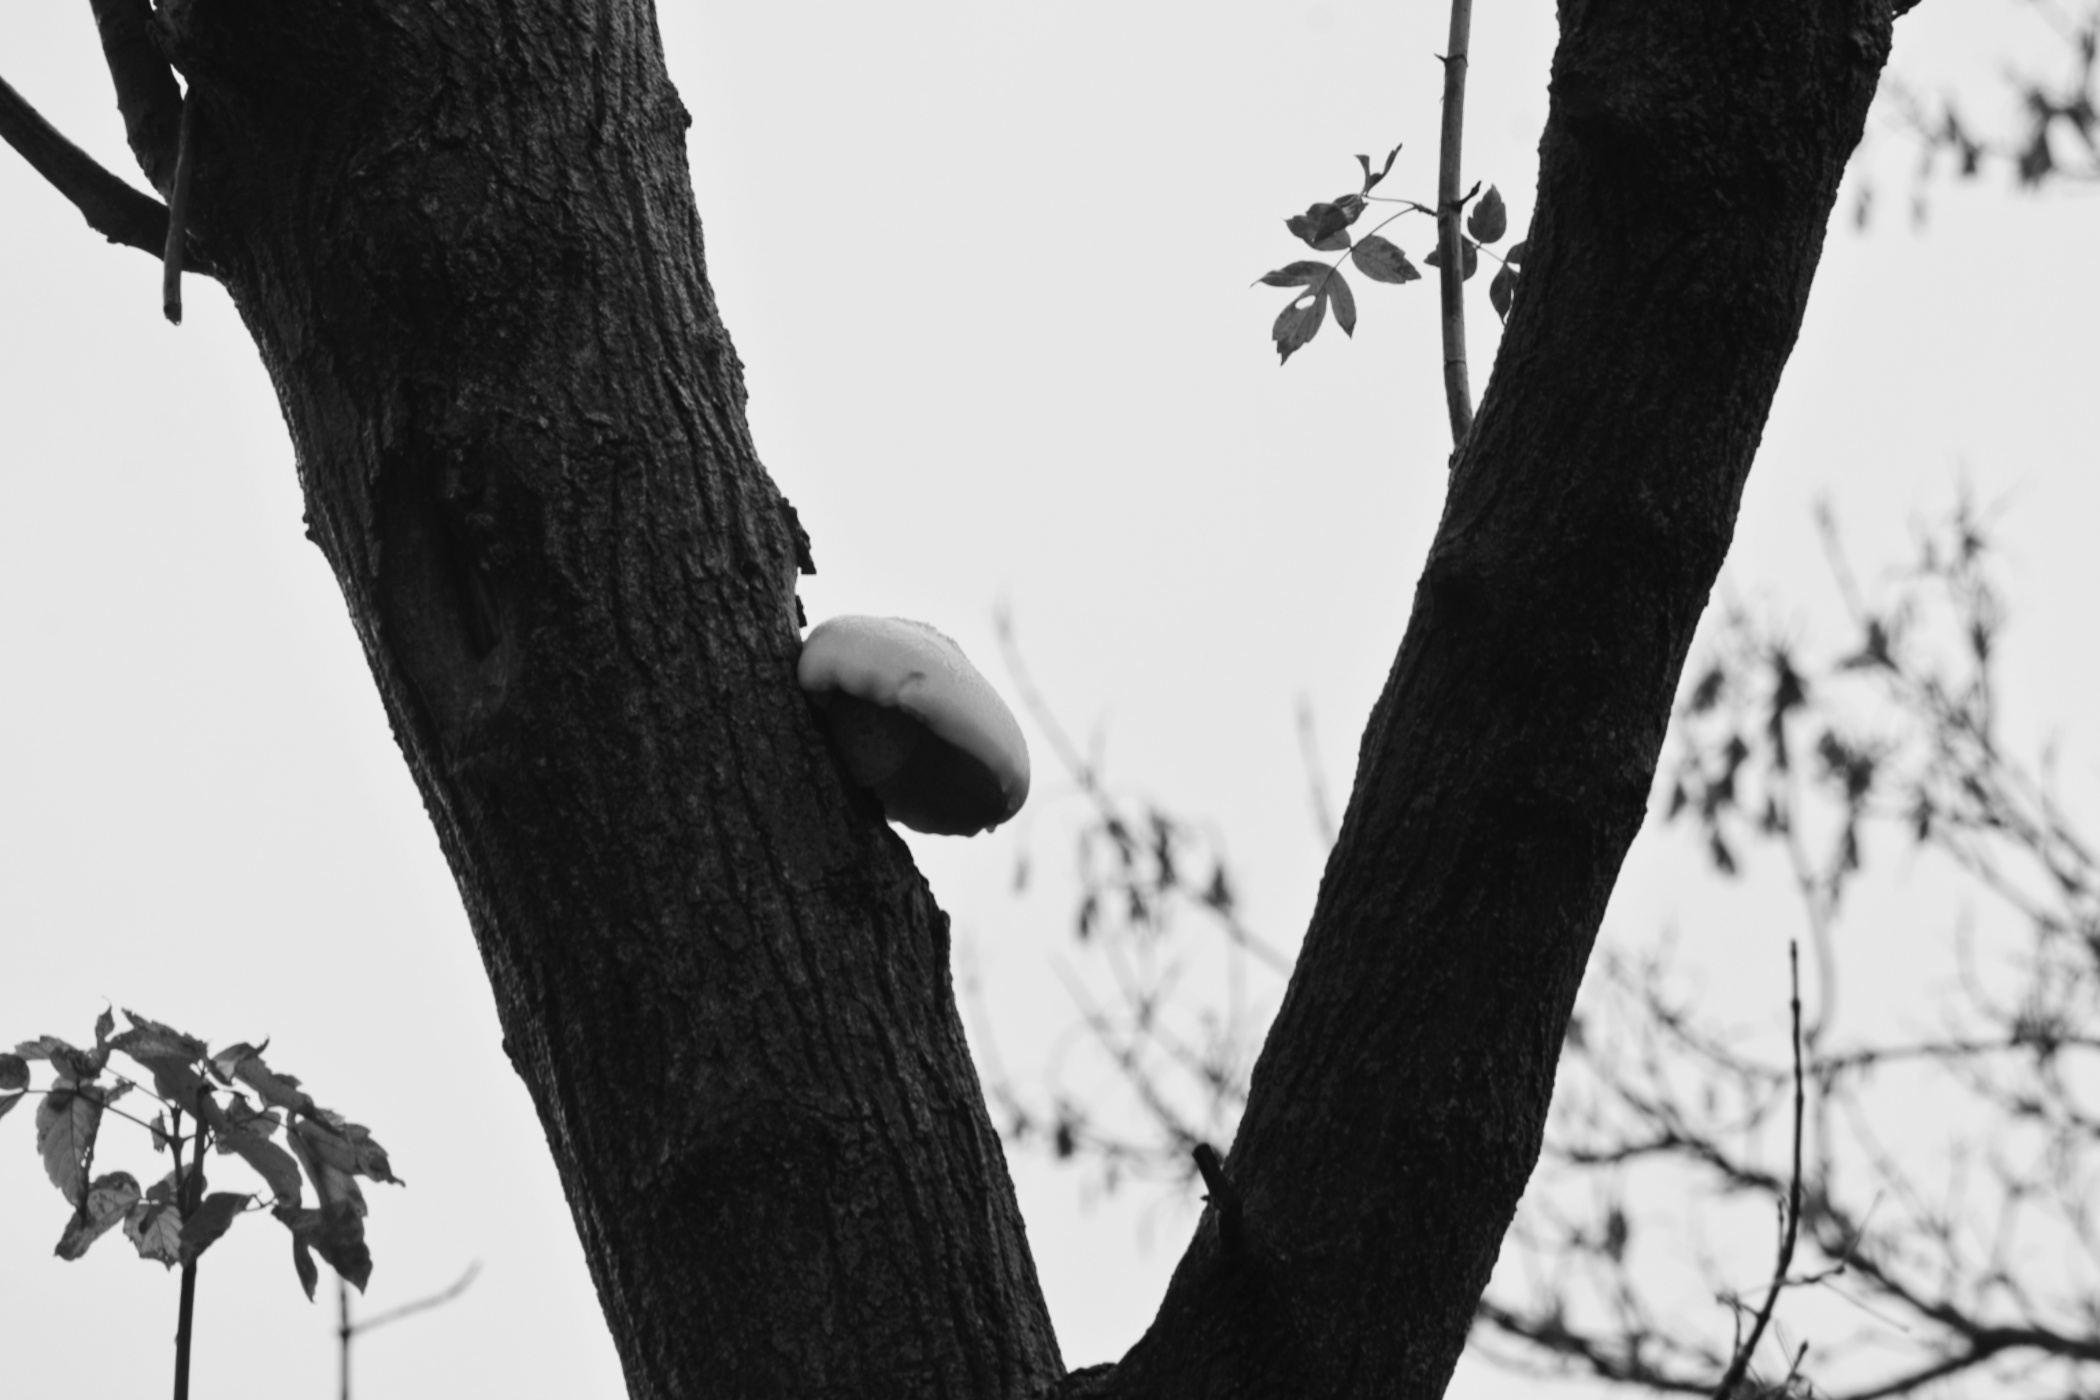 mushroom growing on a tree - the temenosjournal.com